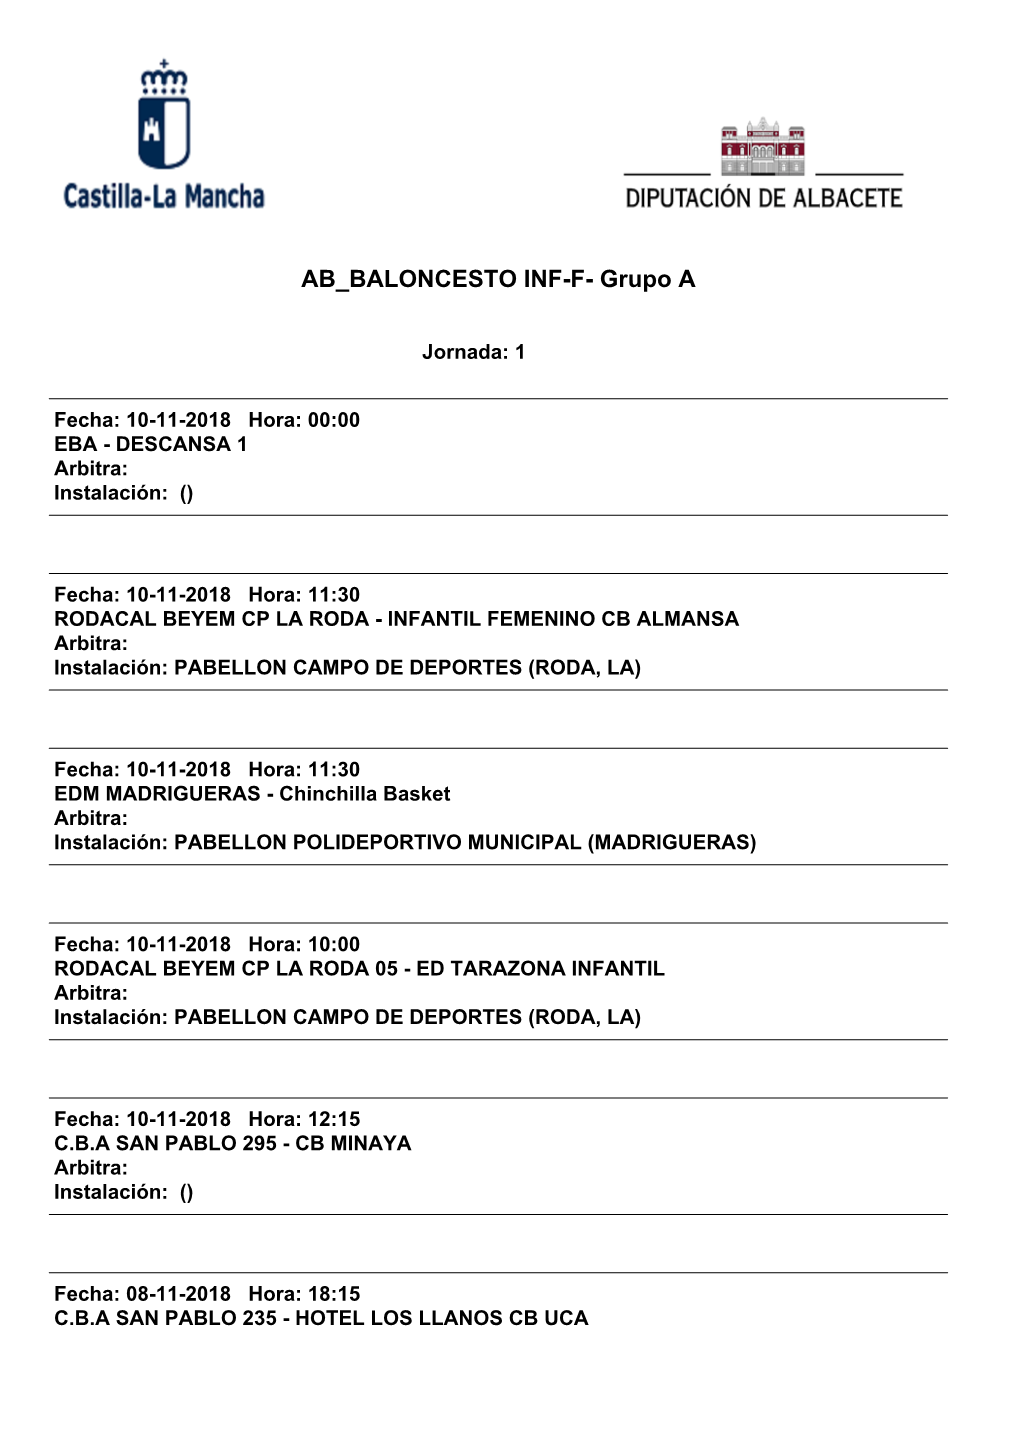 AB BALONCESTO INF-F- Grupo A